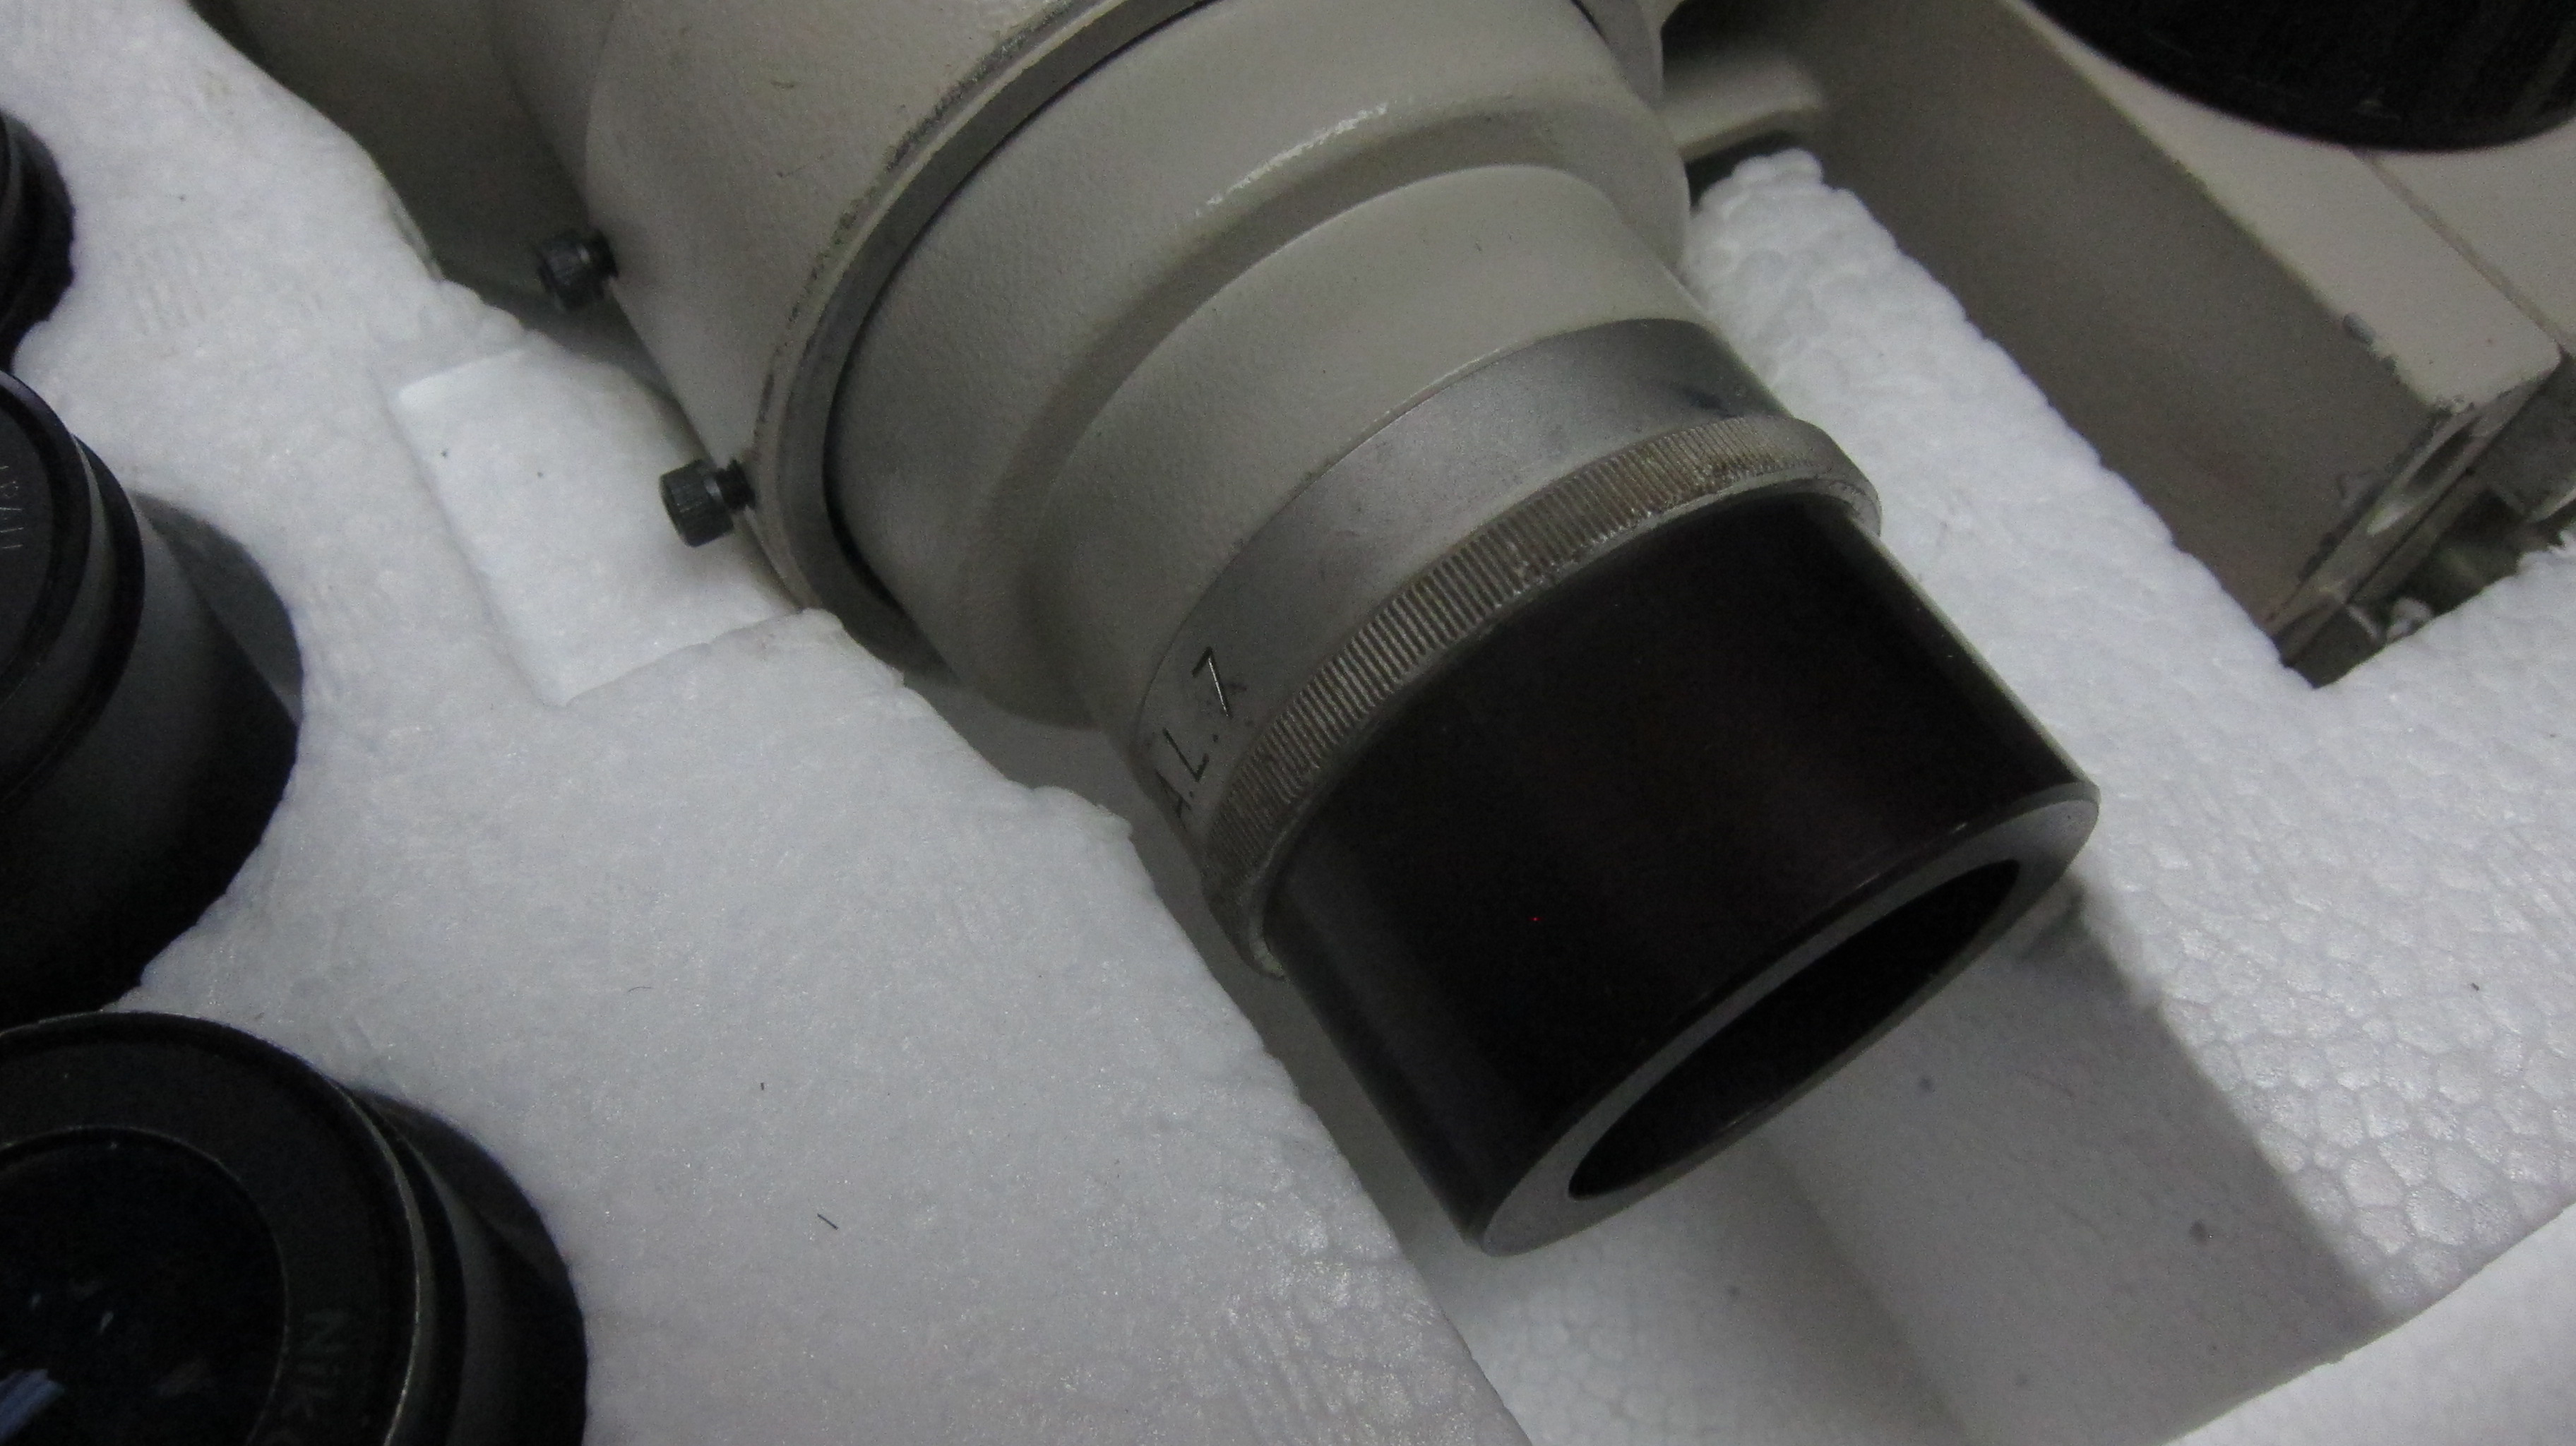 Nikon Stereo Microscope Watchmaking watch repair restoration equipment for sale